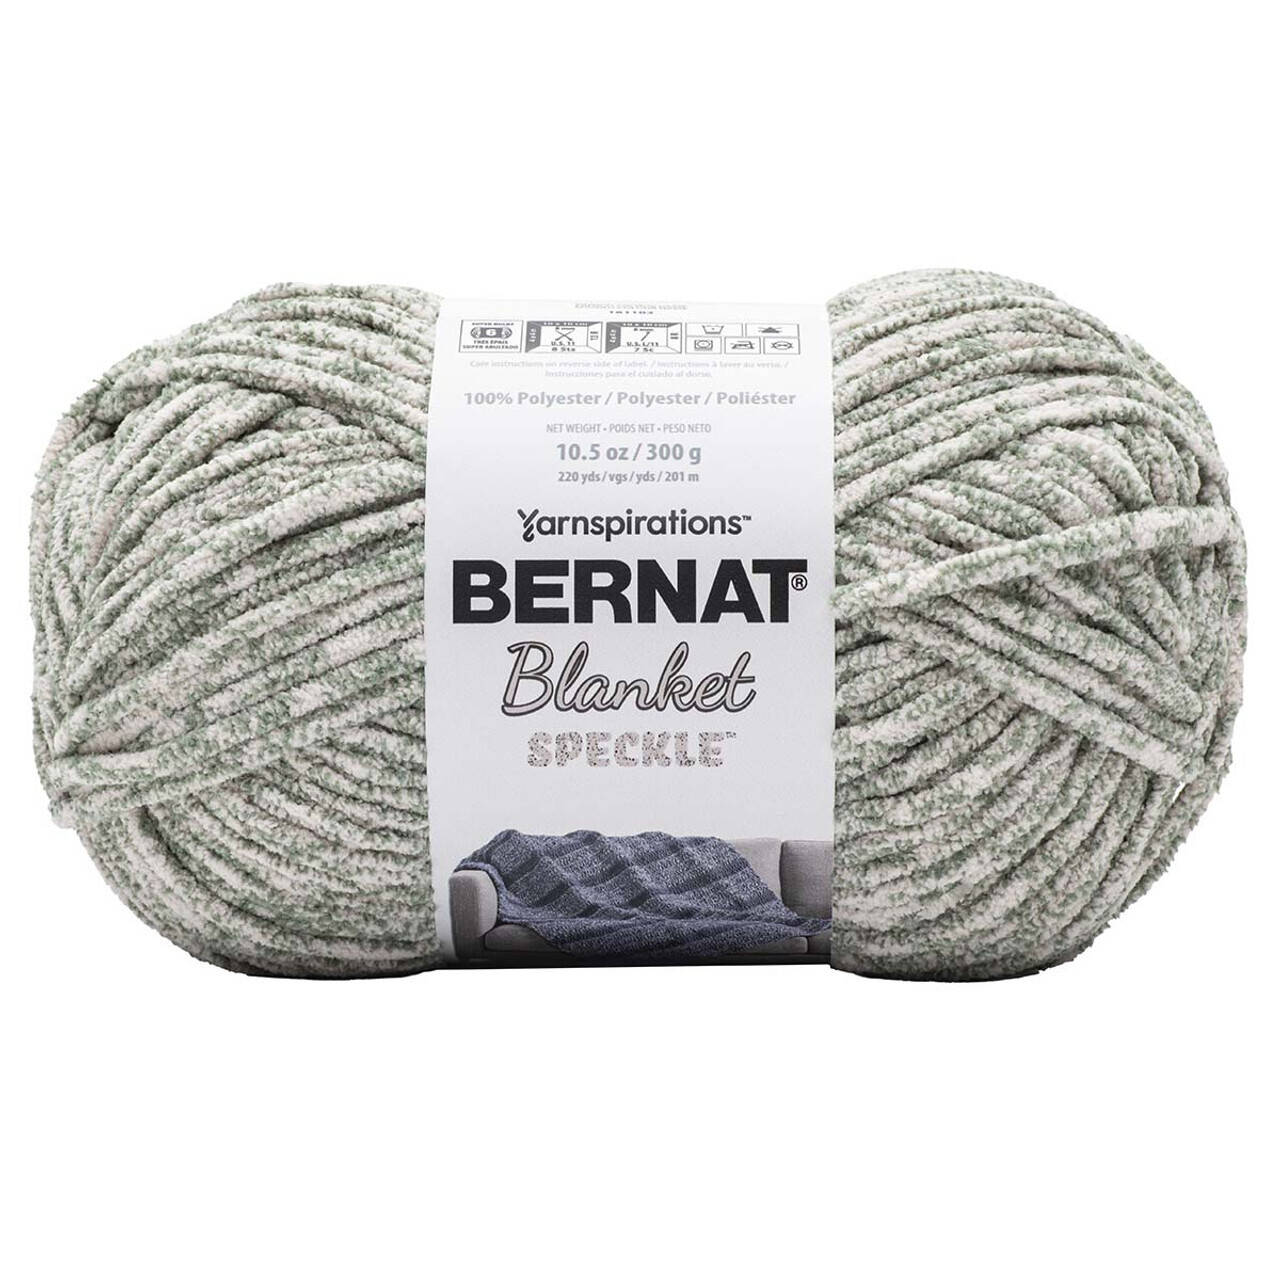 Multipack of 03 - Bernat Super Value Solid Yarn-Winter White